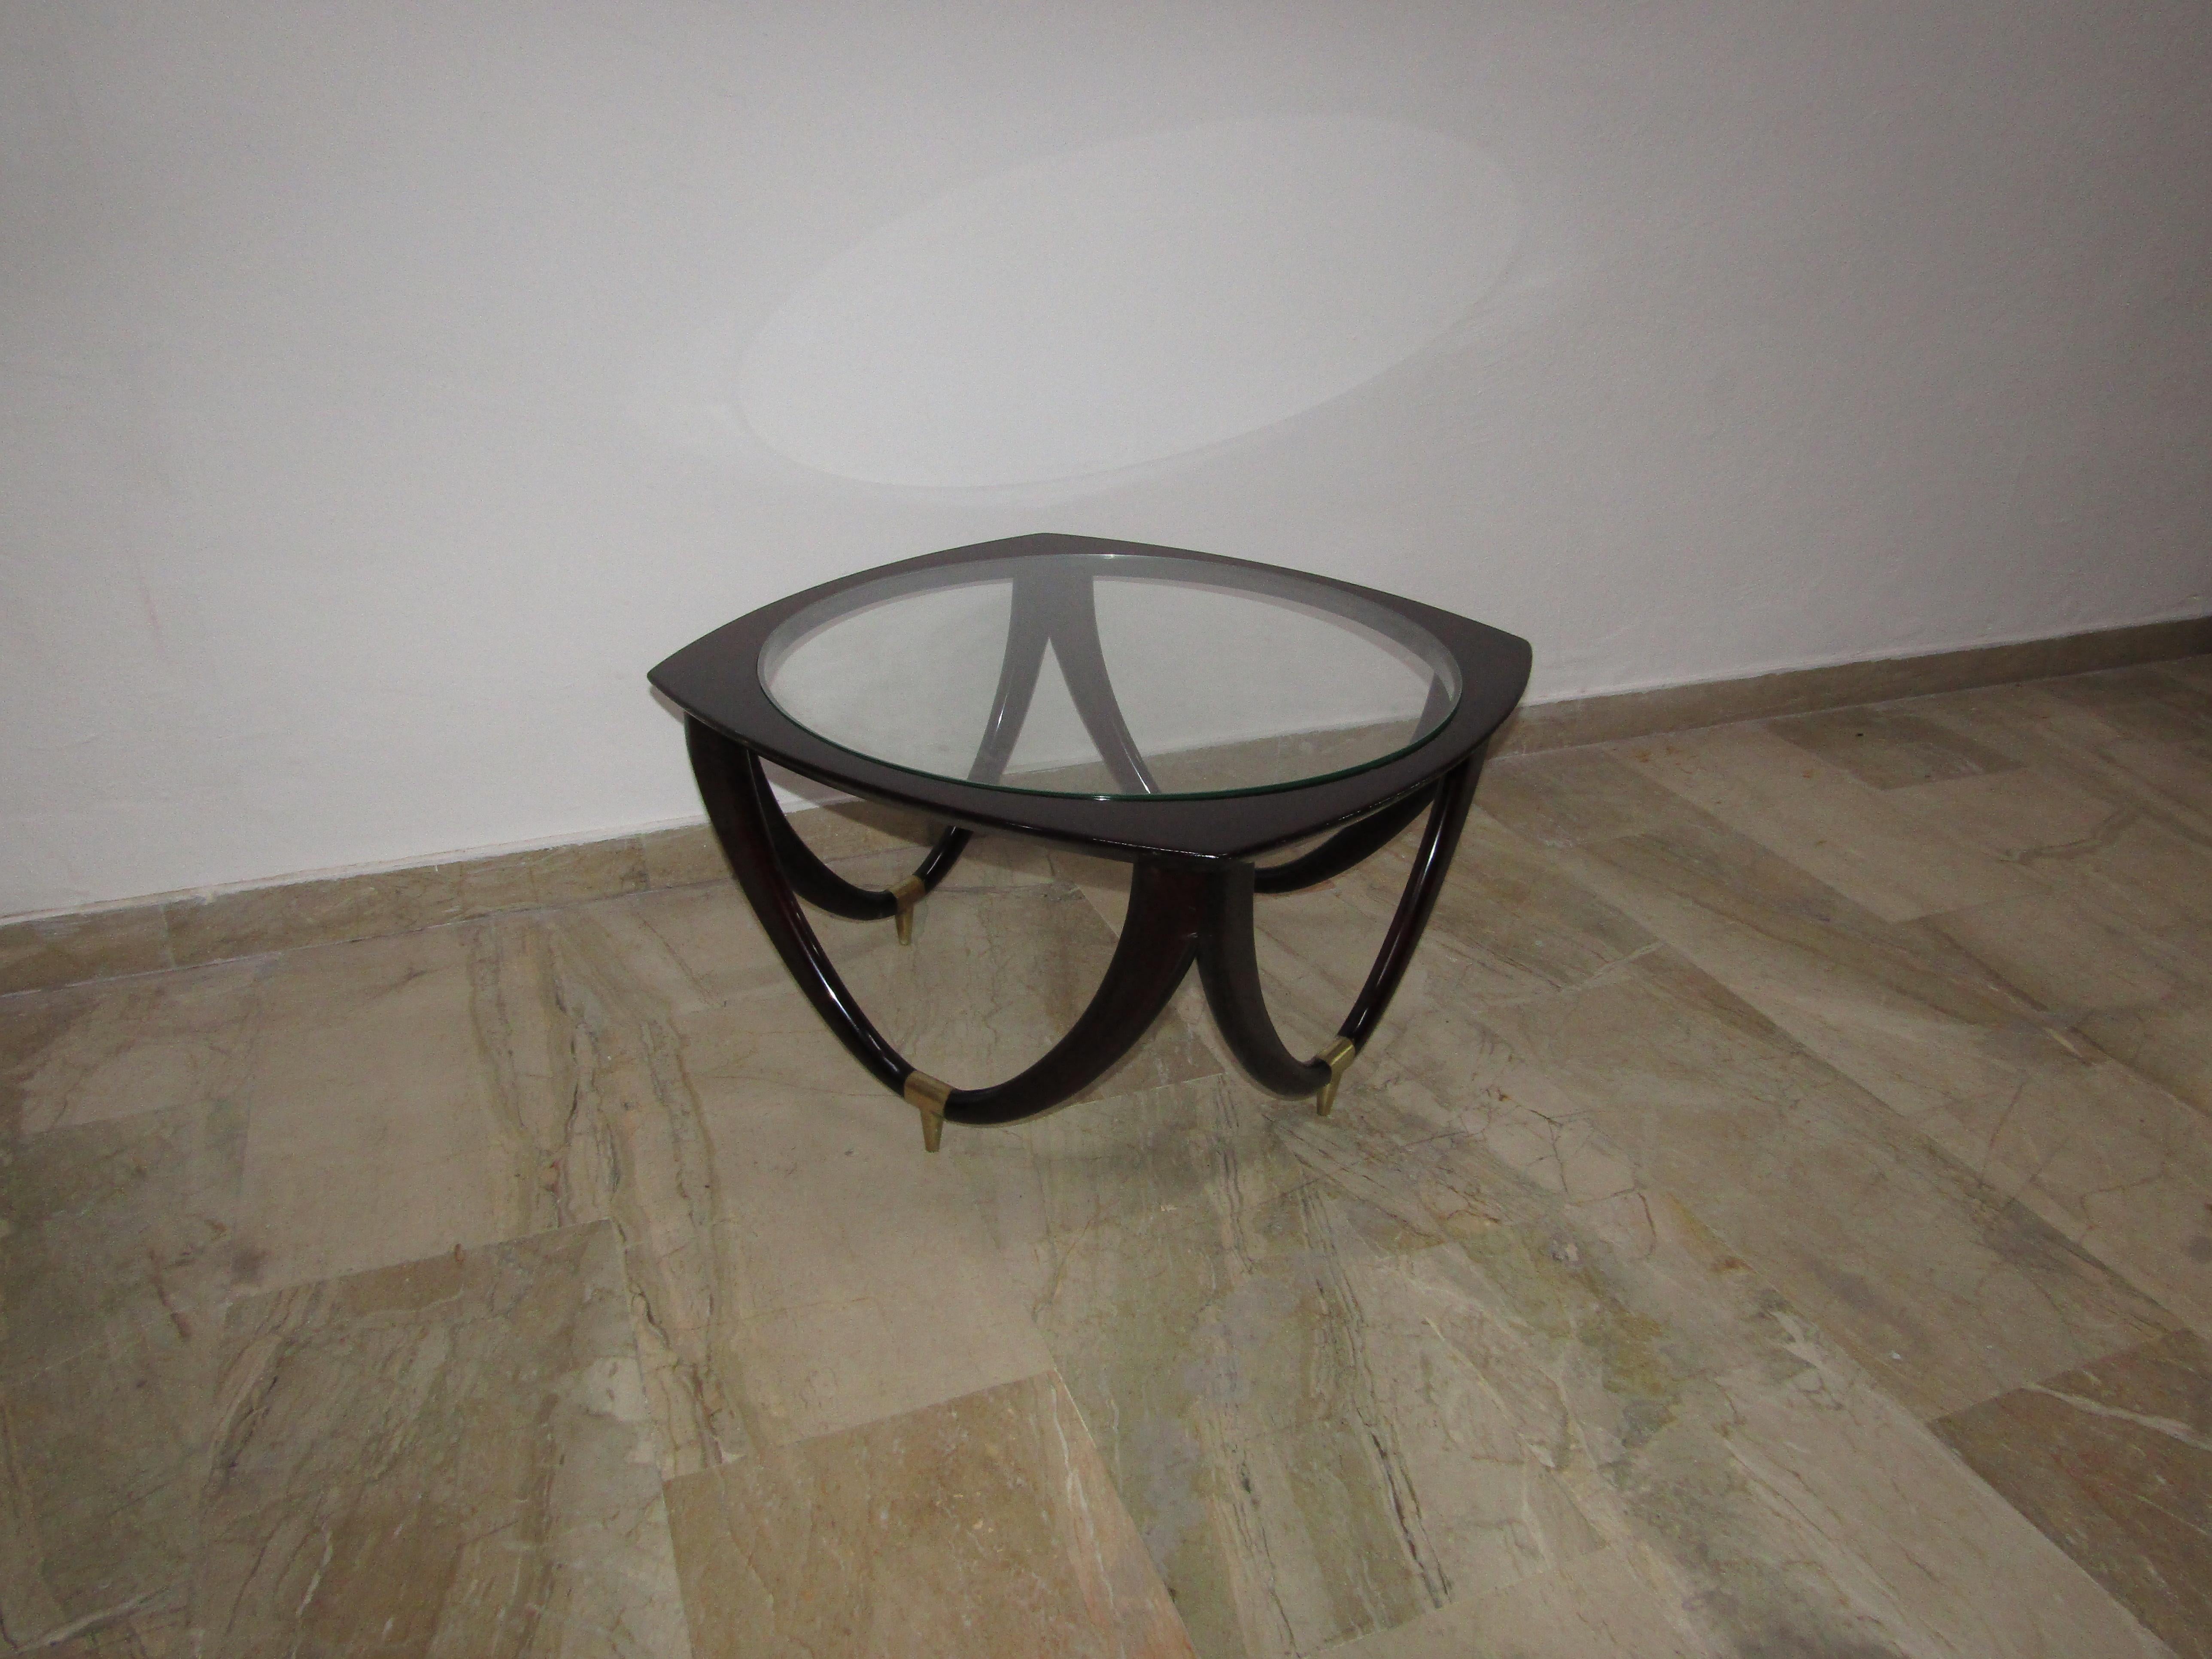 Elegant Melchiorre Bega coffee table, 1950
Walnut, bronze, glass

Measures: H 41cm 72 x 72 cm.